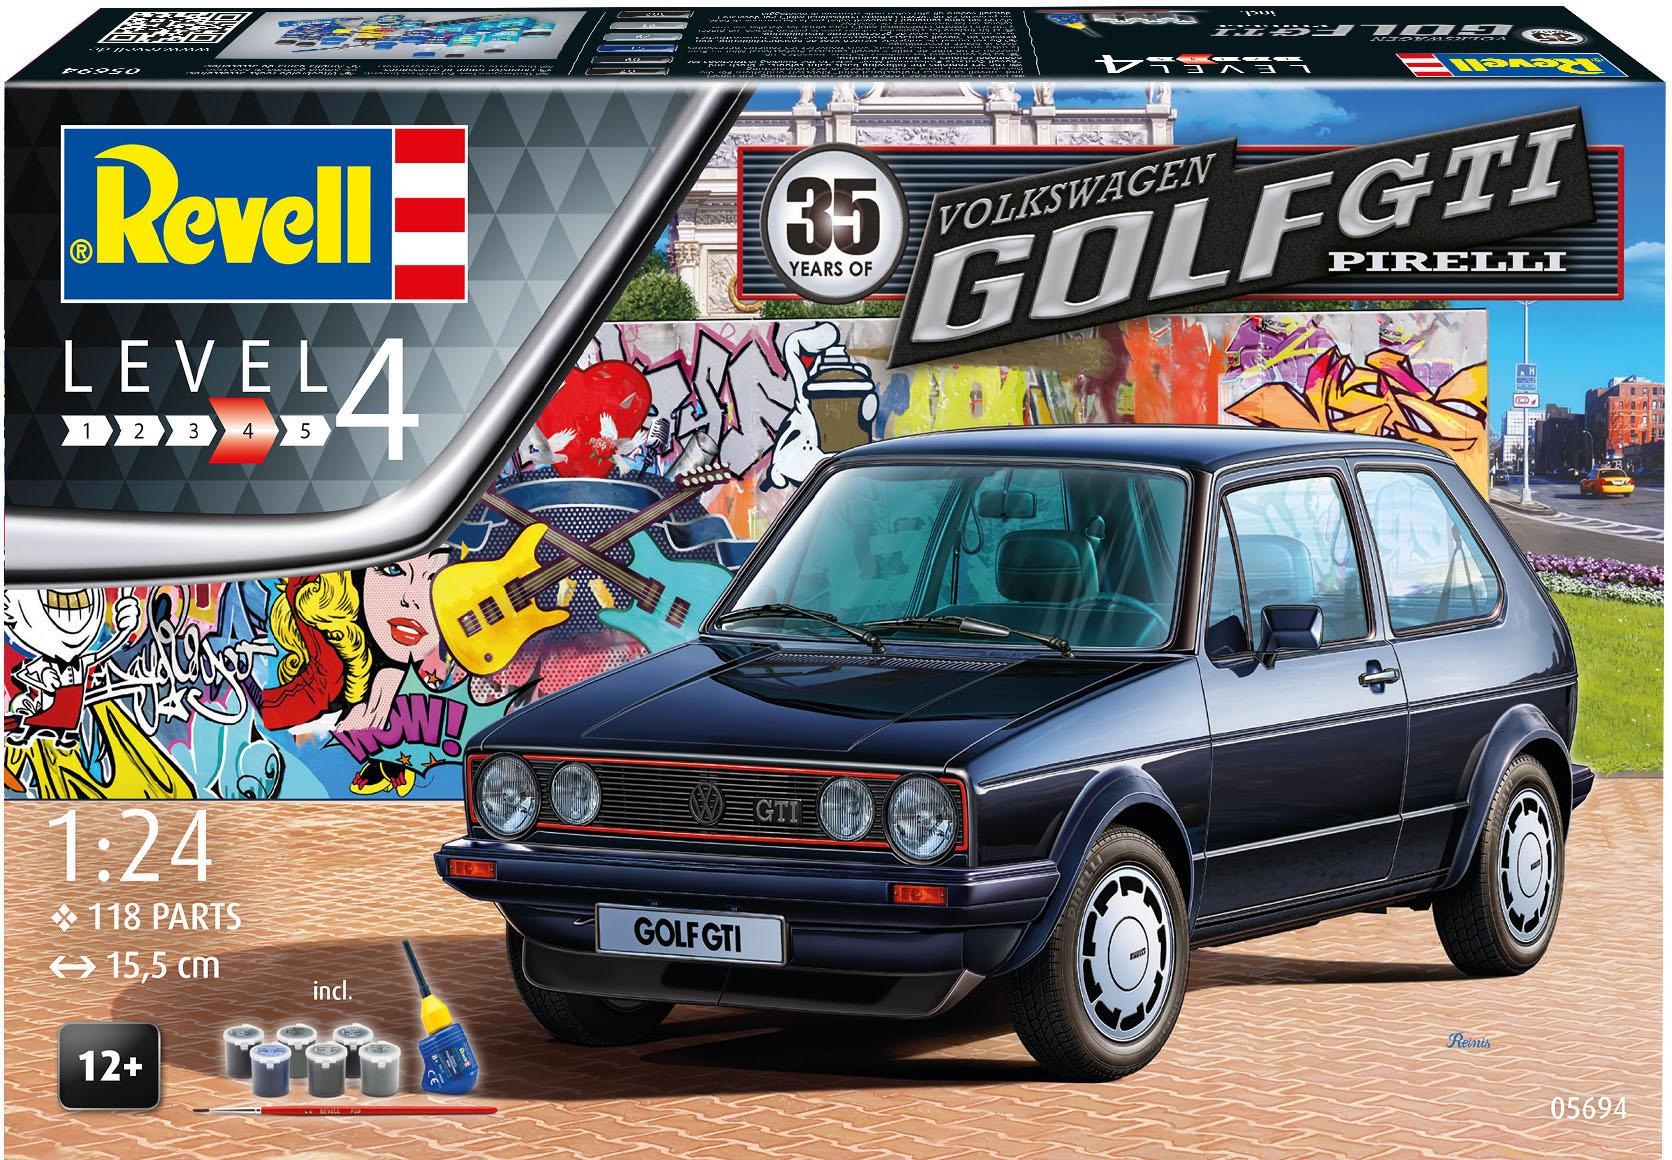 Modellbausatz »Model Set 35 Jahre VW Golf GTI Pirelli«, (Set), 1:24, Made in Europe